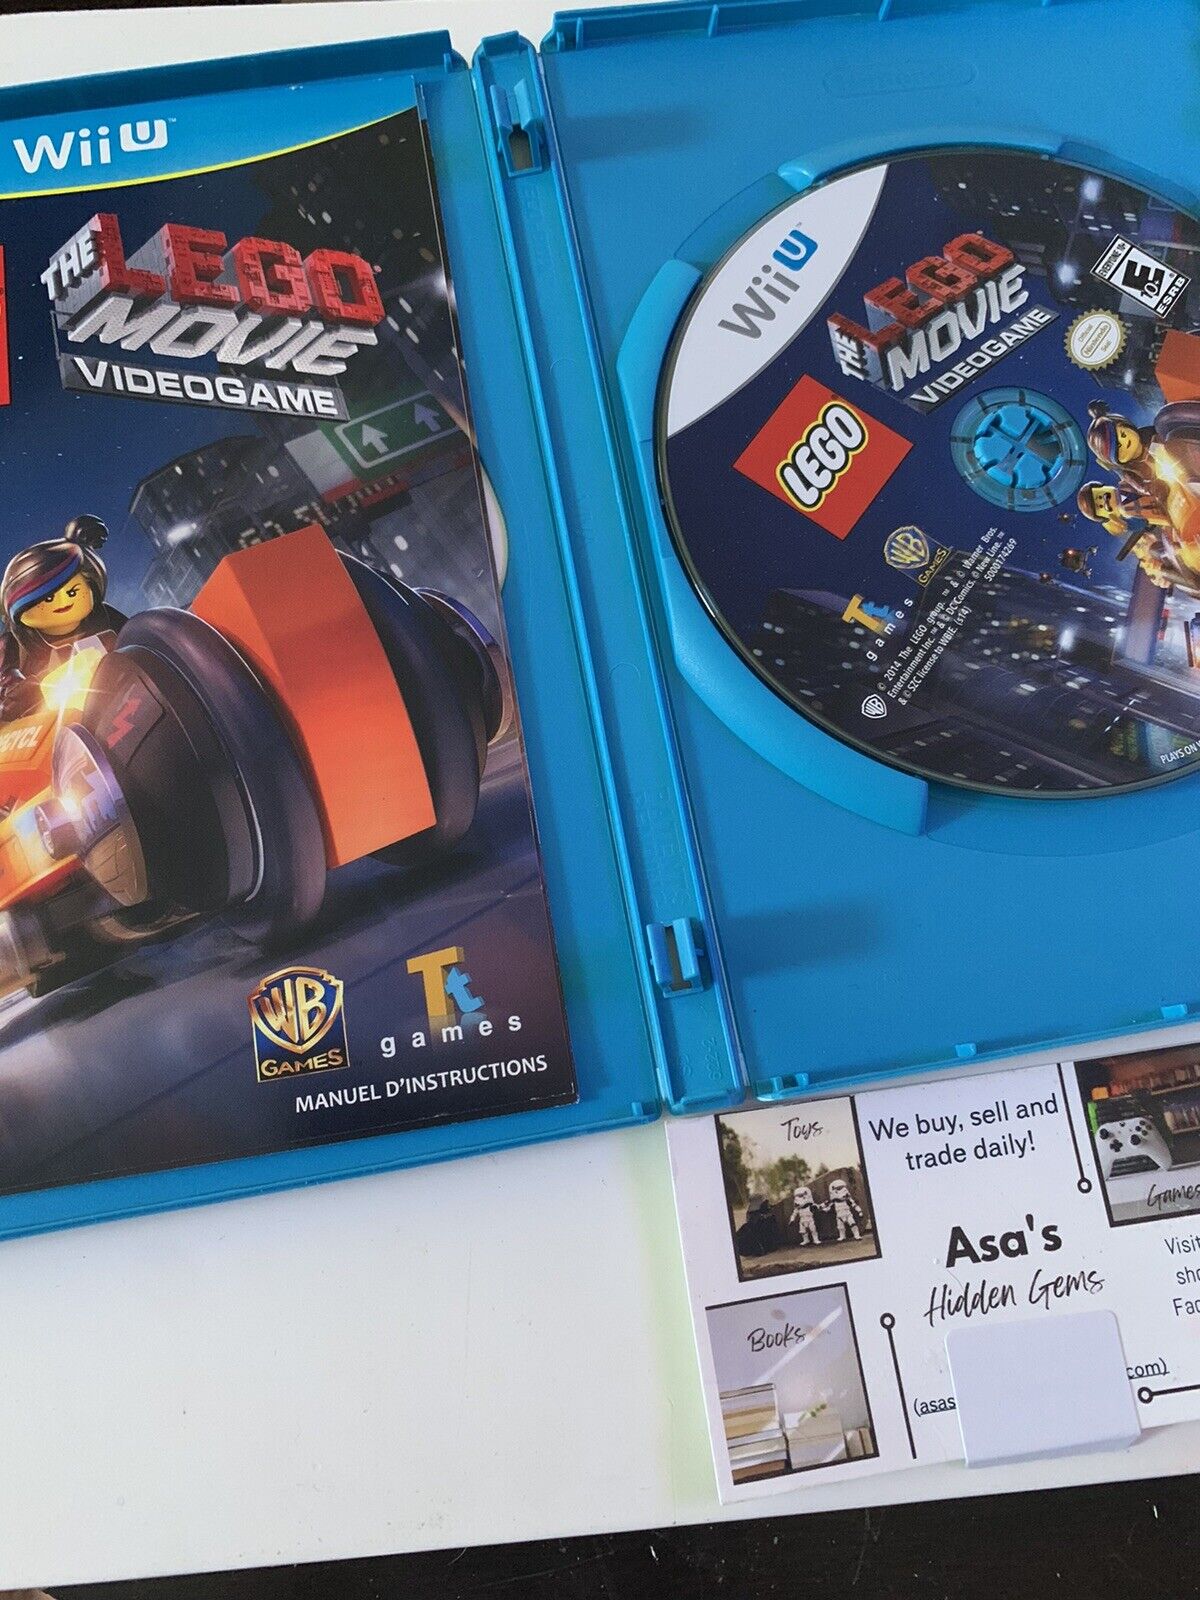 The LEGO Movie Videogame (Nintendo Wii U, 2014)